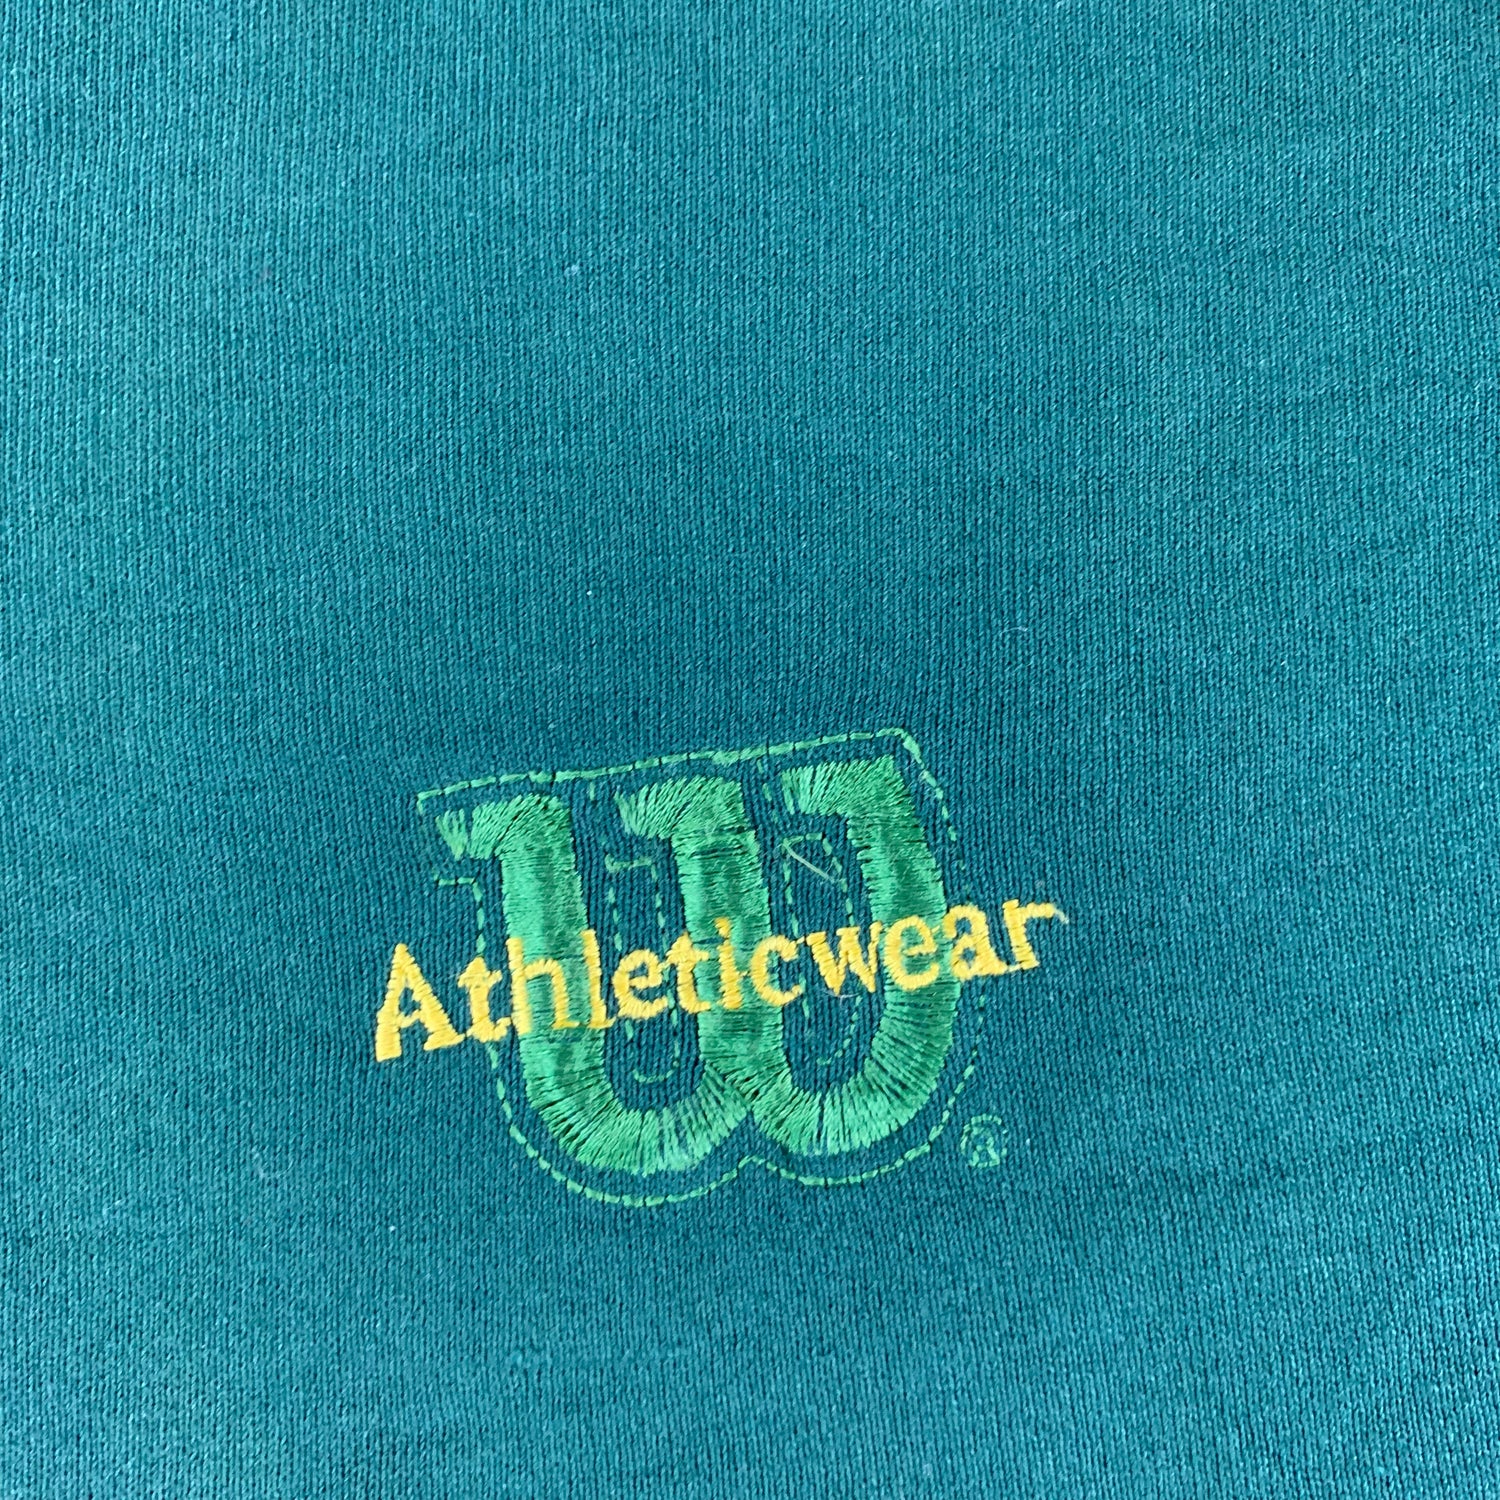 Vintage 1990s Wilson Athleticwear Sweatshirt size XXL